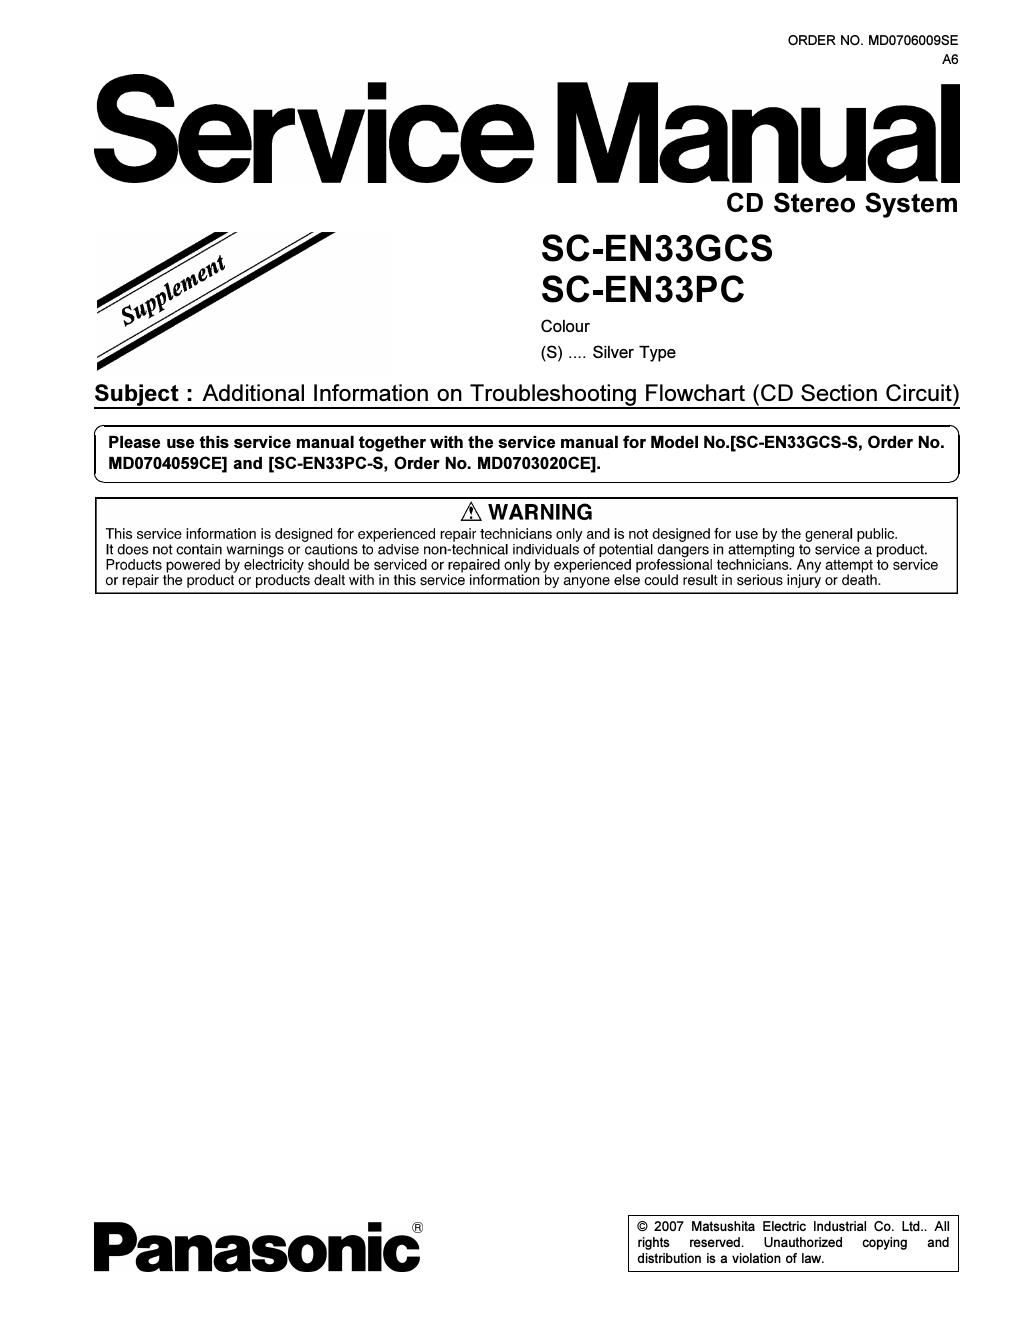 panasonic sc en 33 gcs service manual